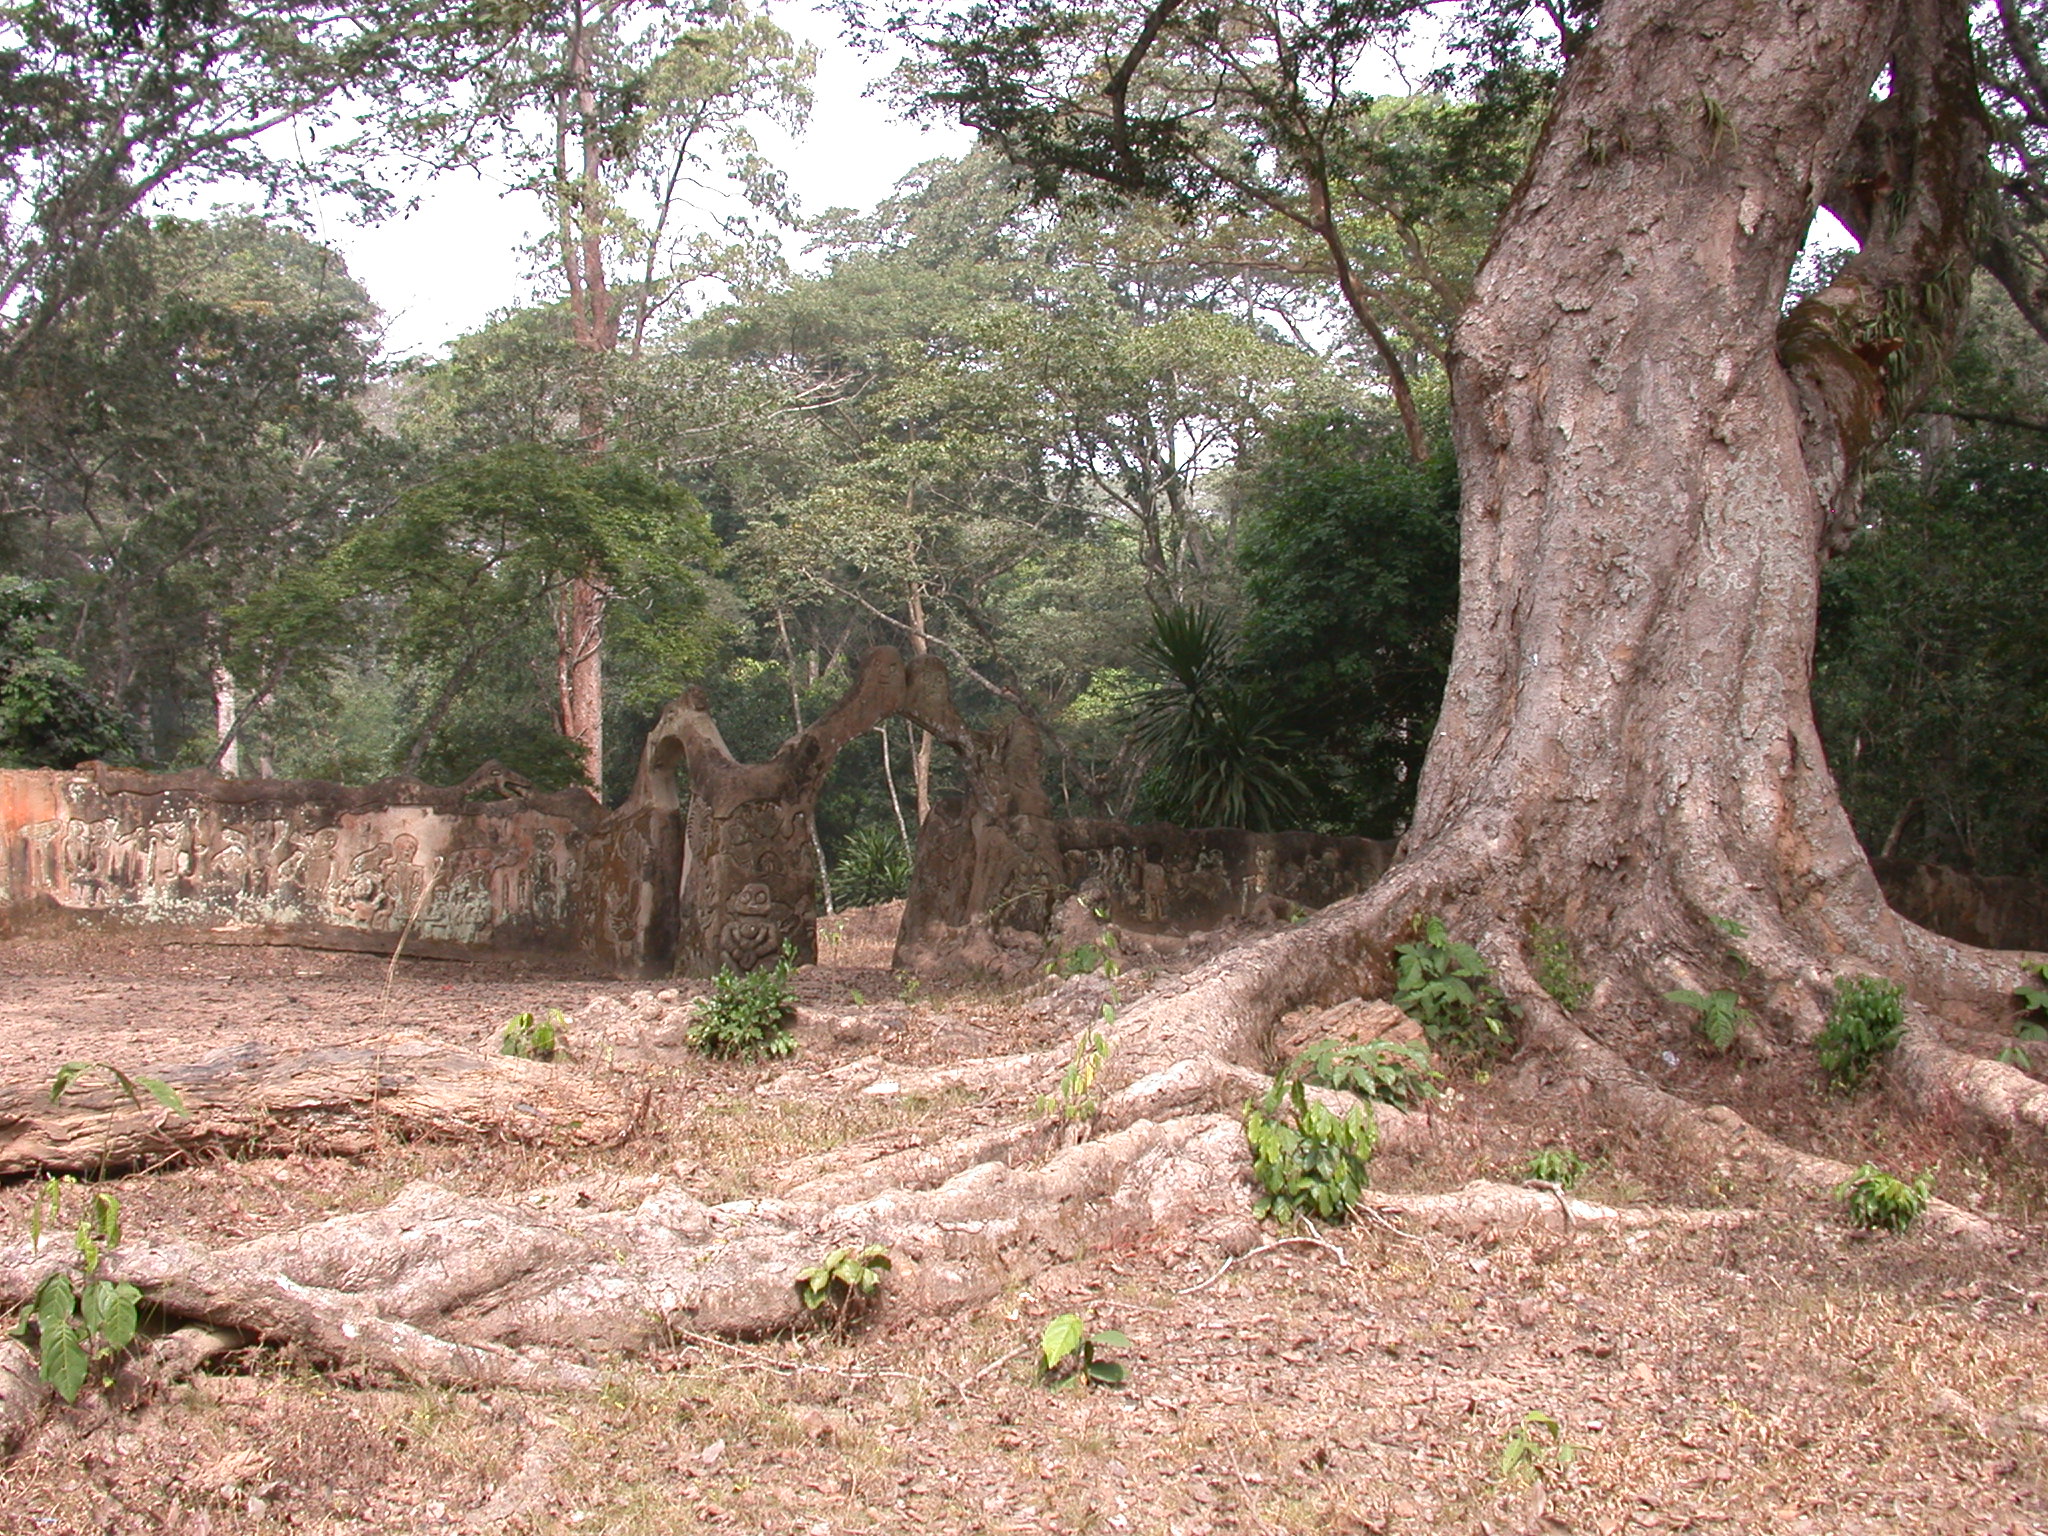 Gnarly Tree by Sculpted Wall, Osun Sacred Grove, Oshogbo, Nigeria